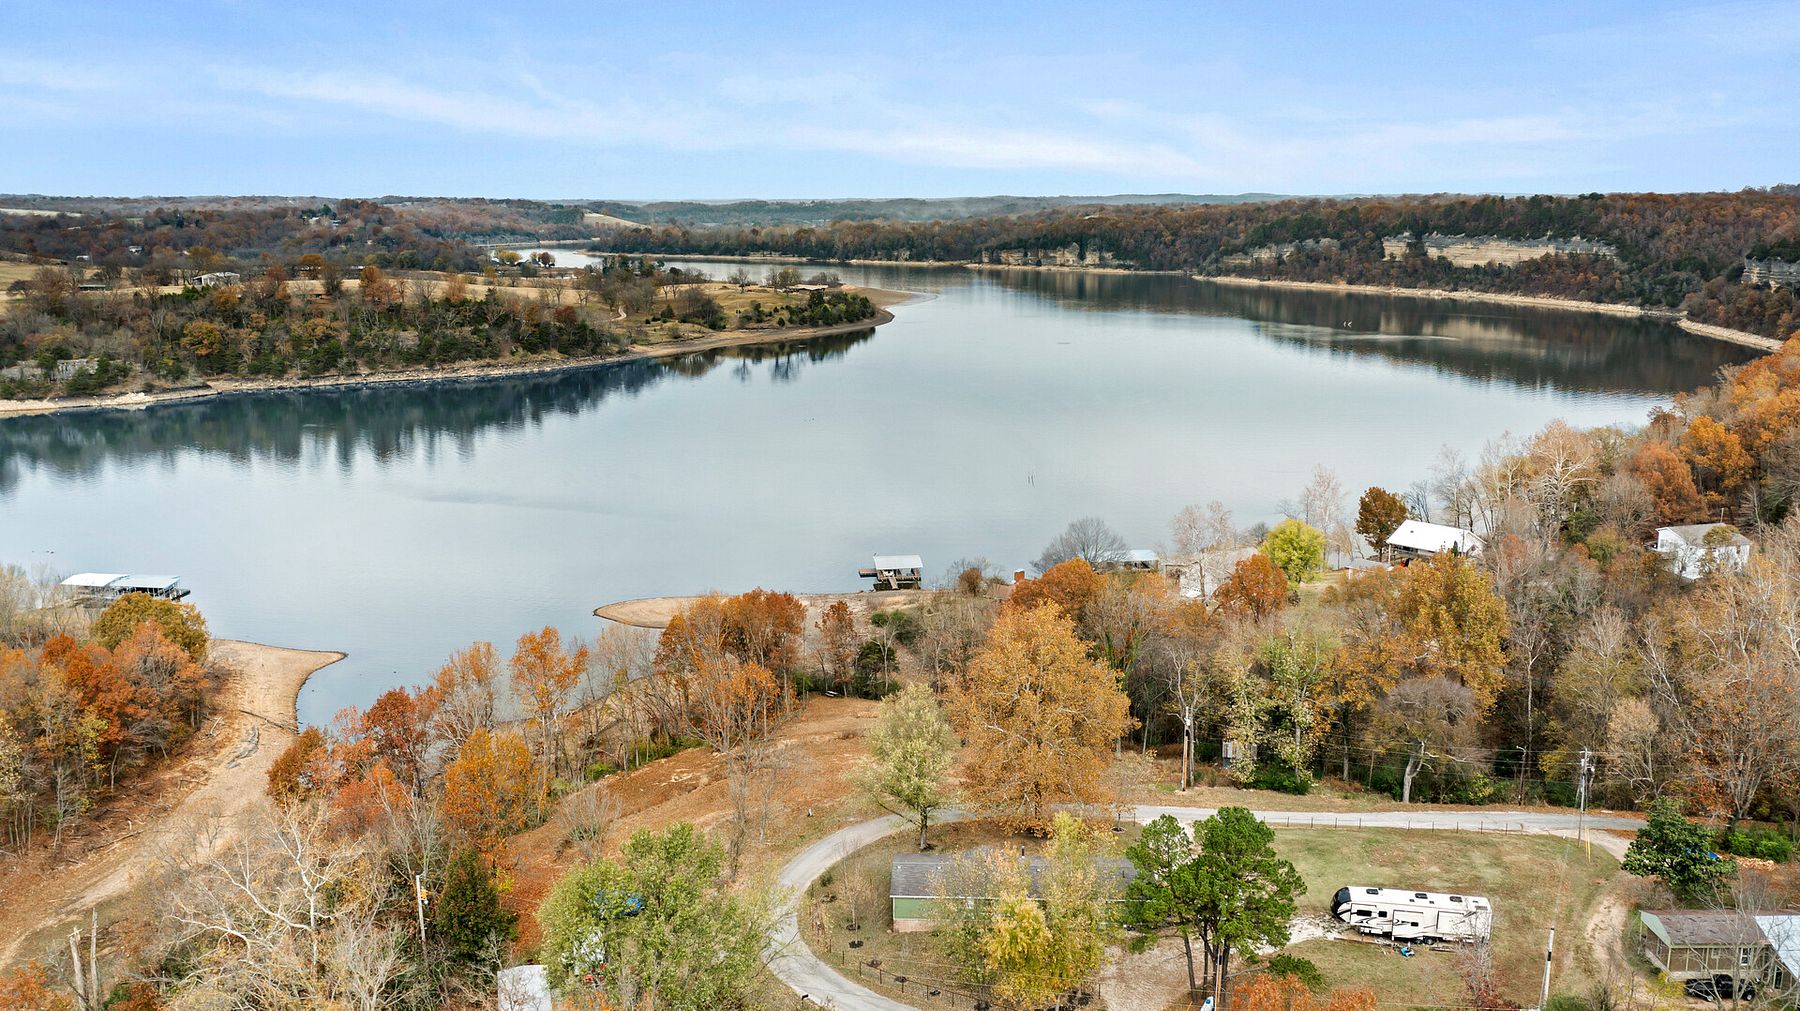 1 Acre of Residential Land for Sale in Springdale, Arkansas